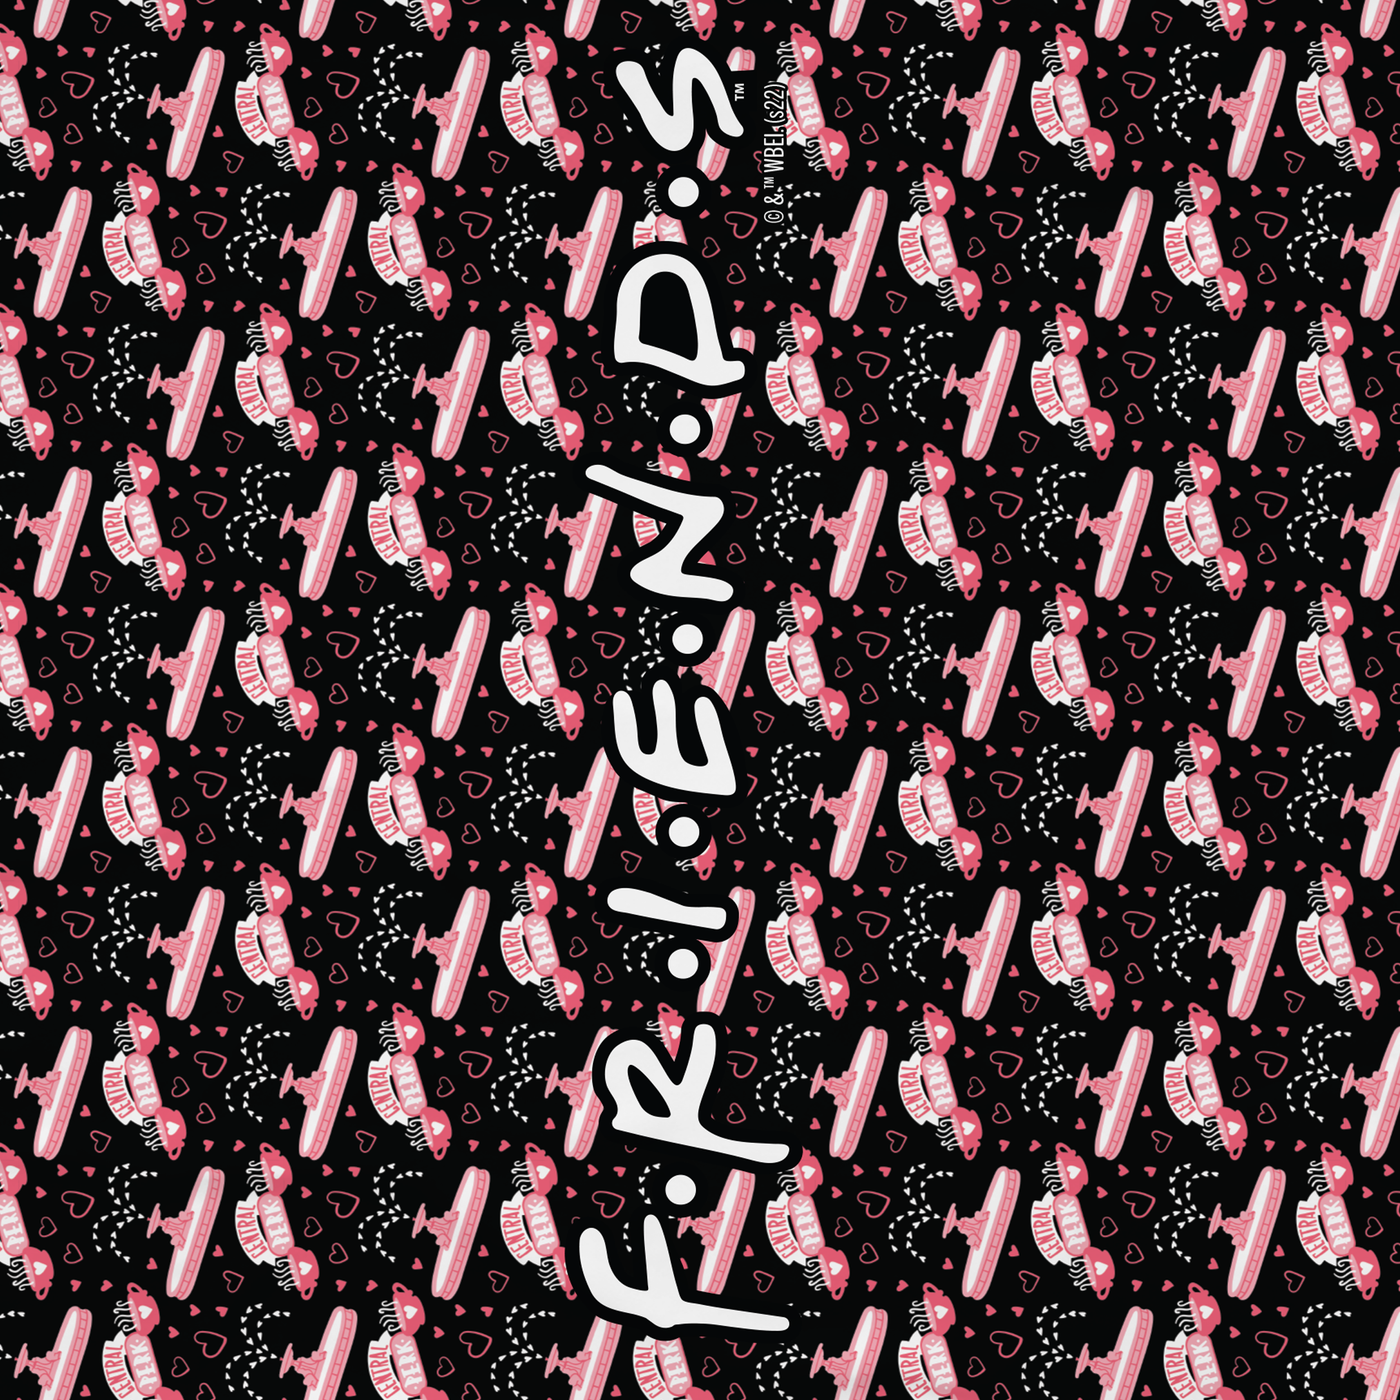 Friends Pink Central Perk Sherpa Blanket